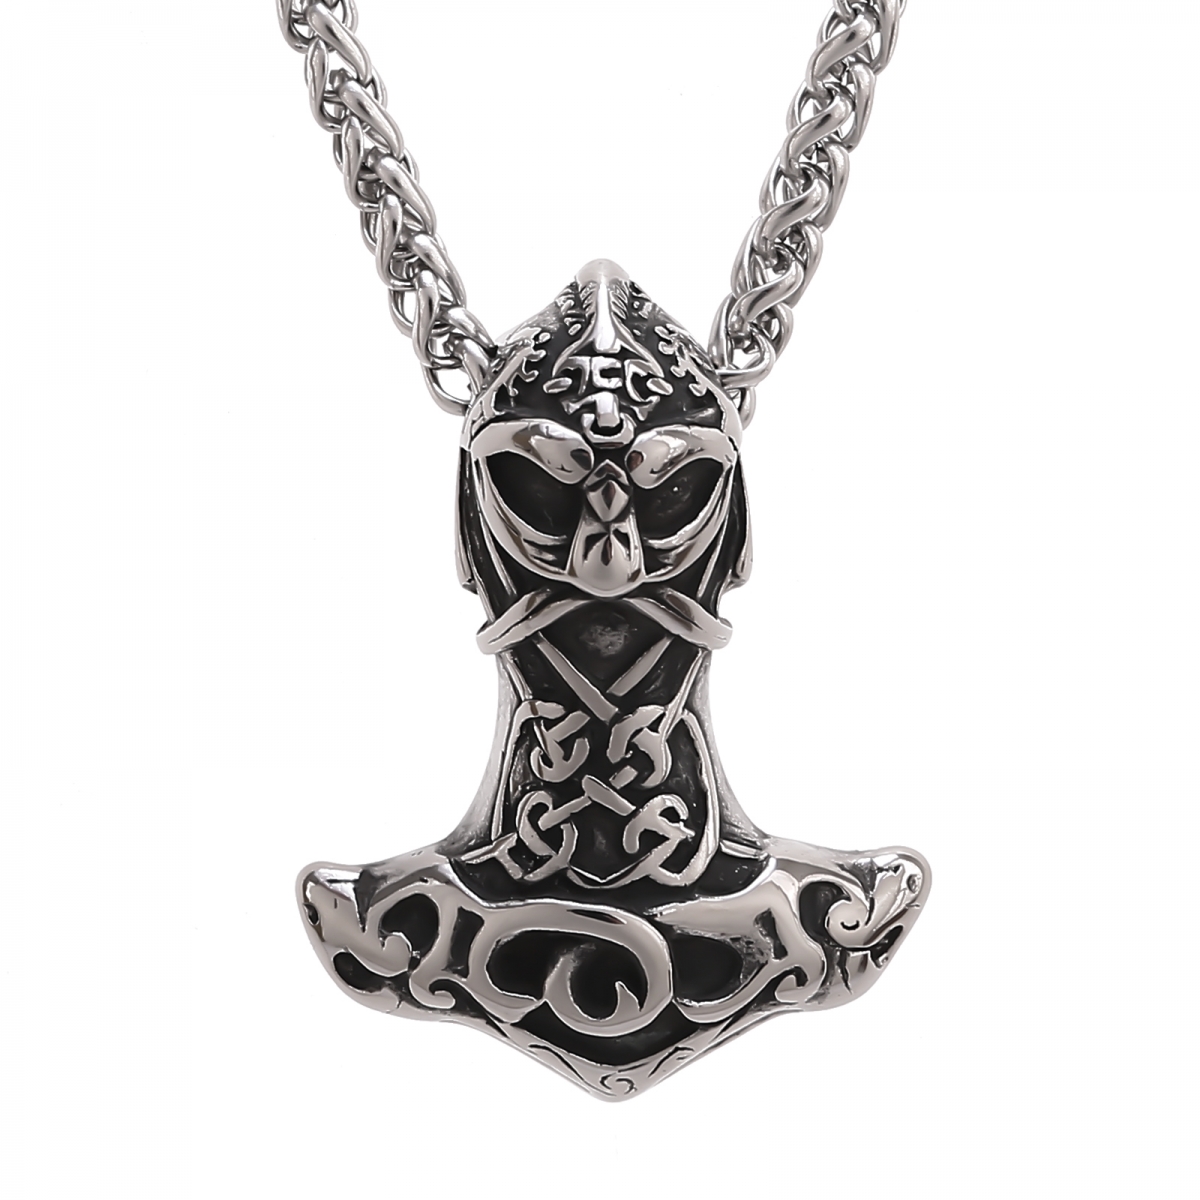 Odin Necklace US$2.9/PC-NORSECOLLECTION- Viking Jewelry,Viking Necklace,Viking Bracelet,Viking Rings,Viking Mugs,Viking Accessories,Viking Crafts